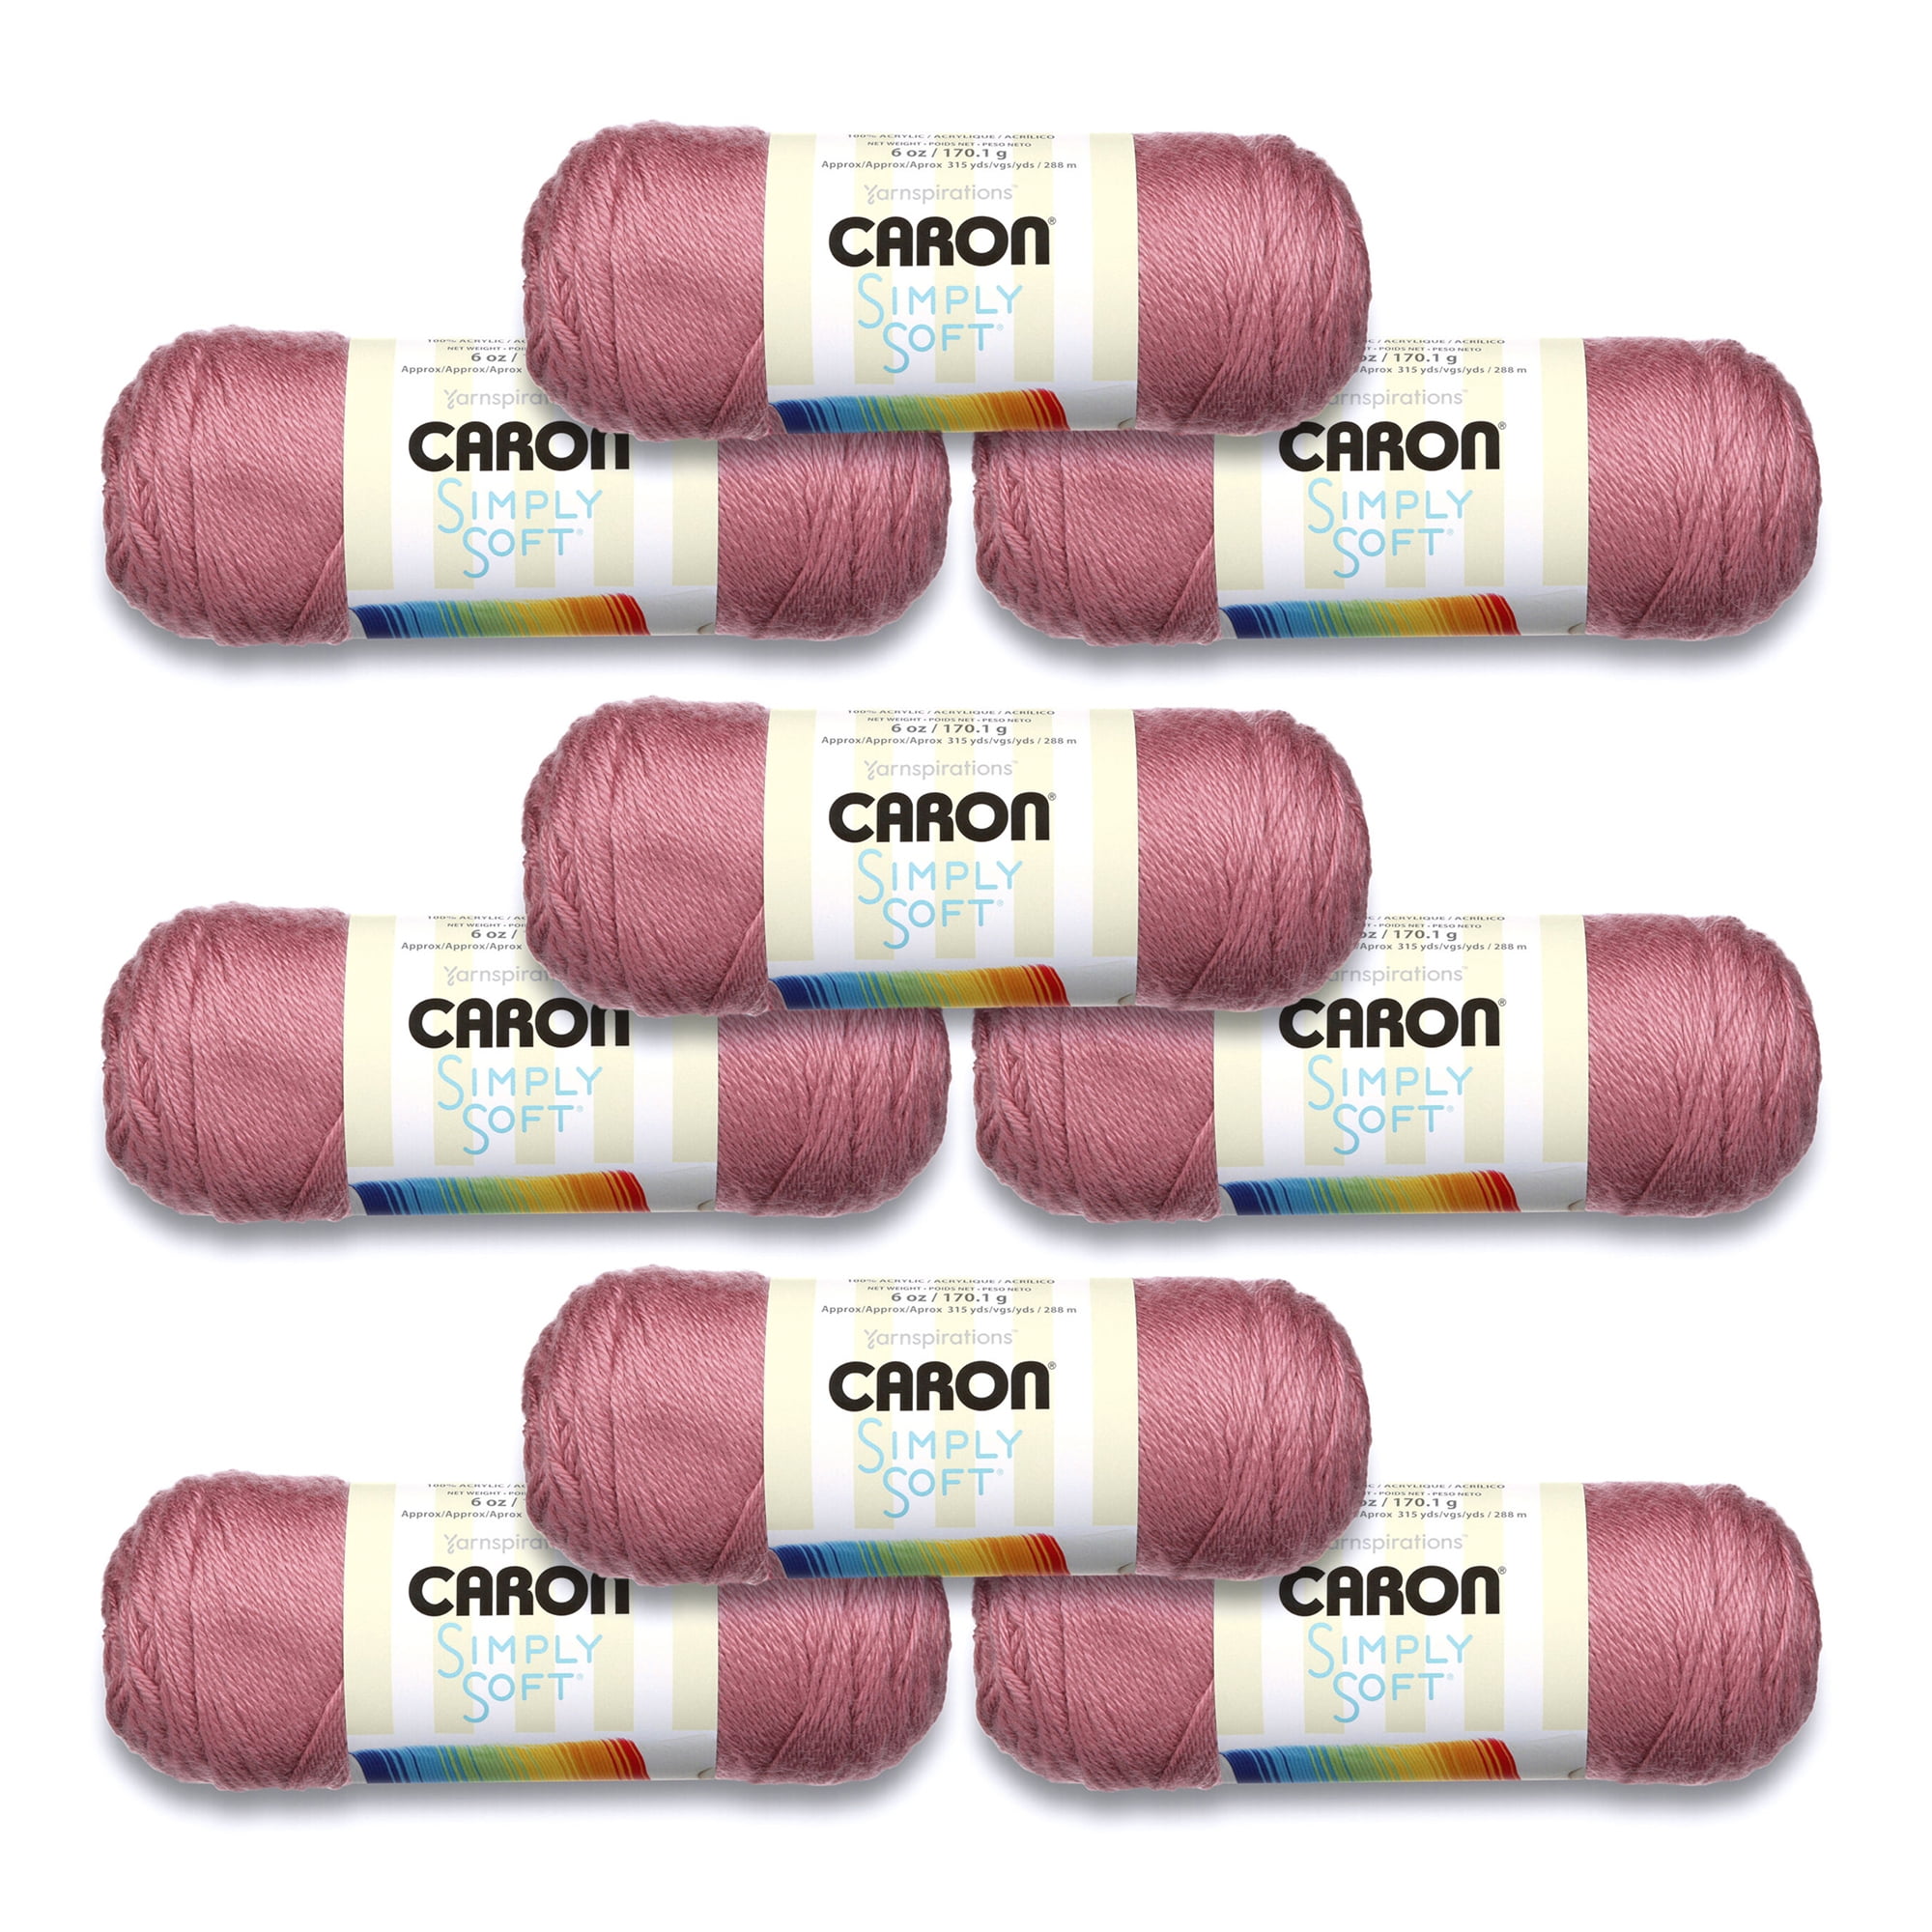 FEATHERED GRAY - Caron Simply Soft 6oz / 315yds (170g / 288m) 100% Acrylic  yarn. Item H970039794